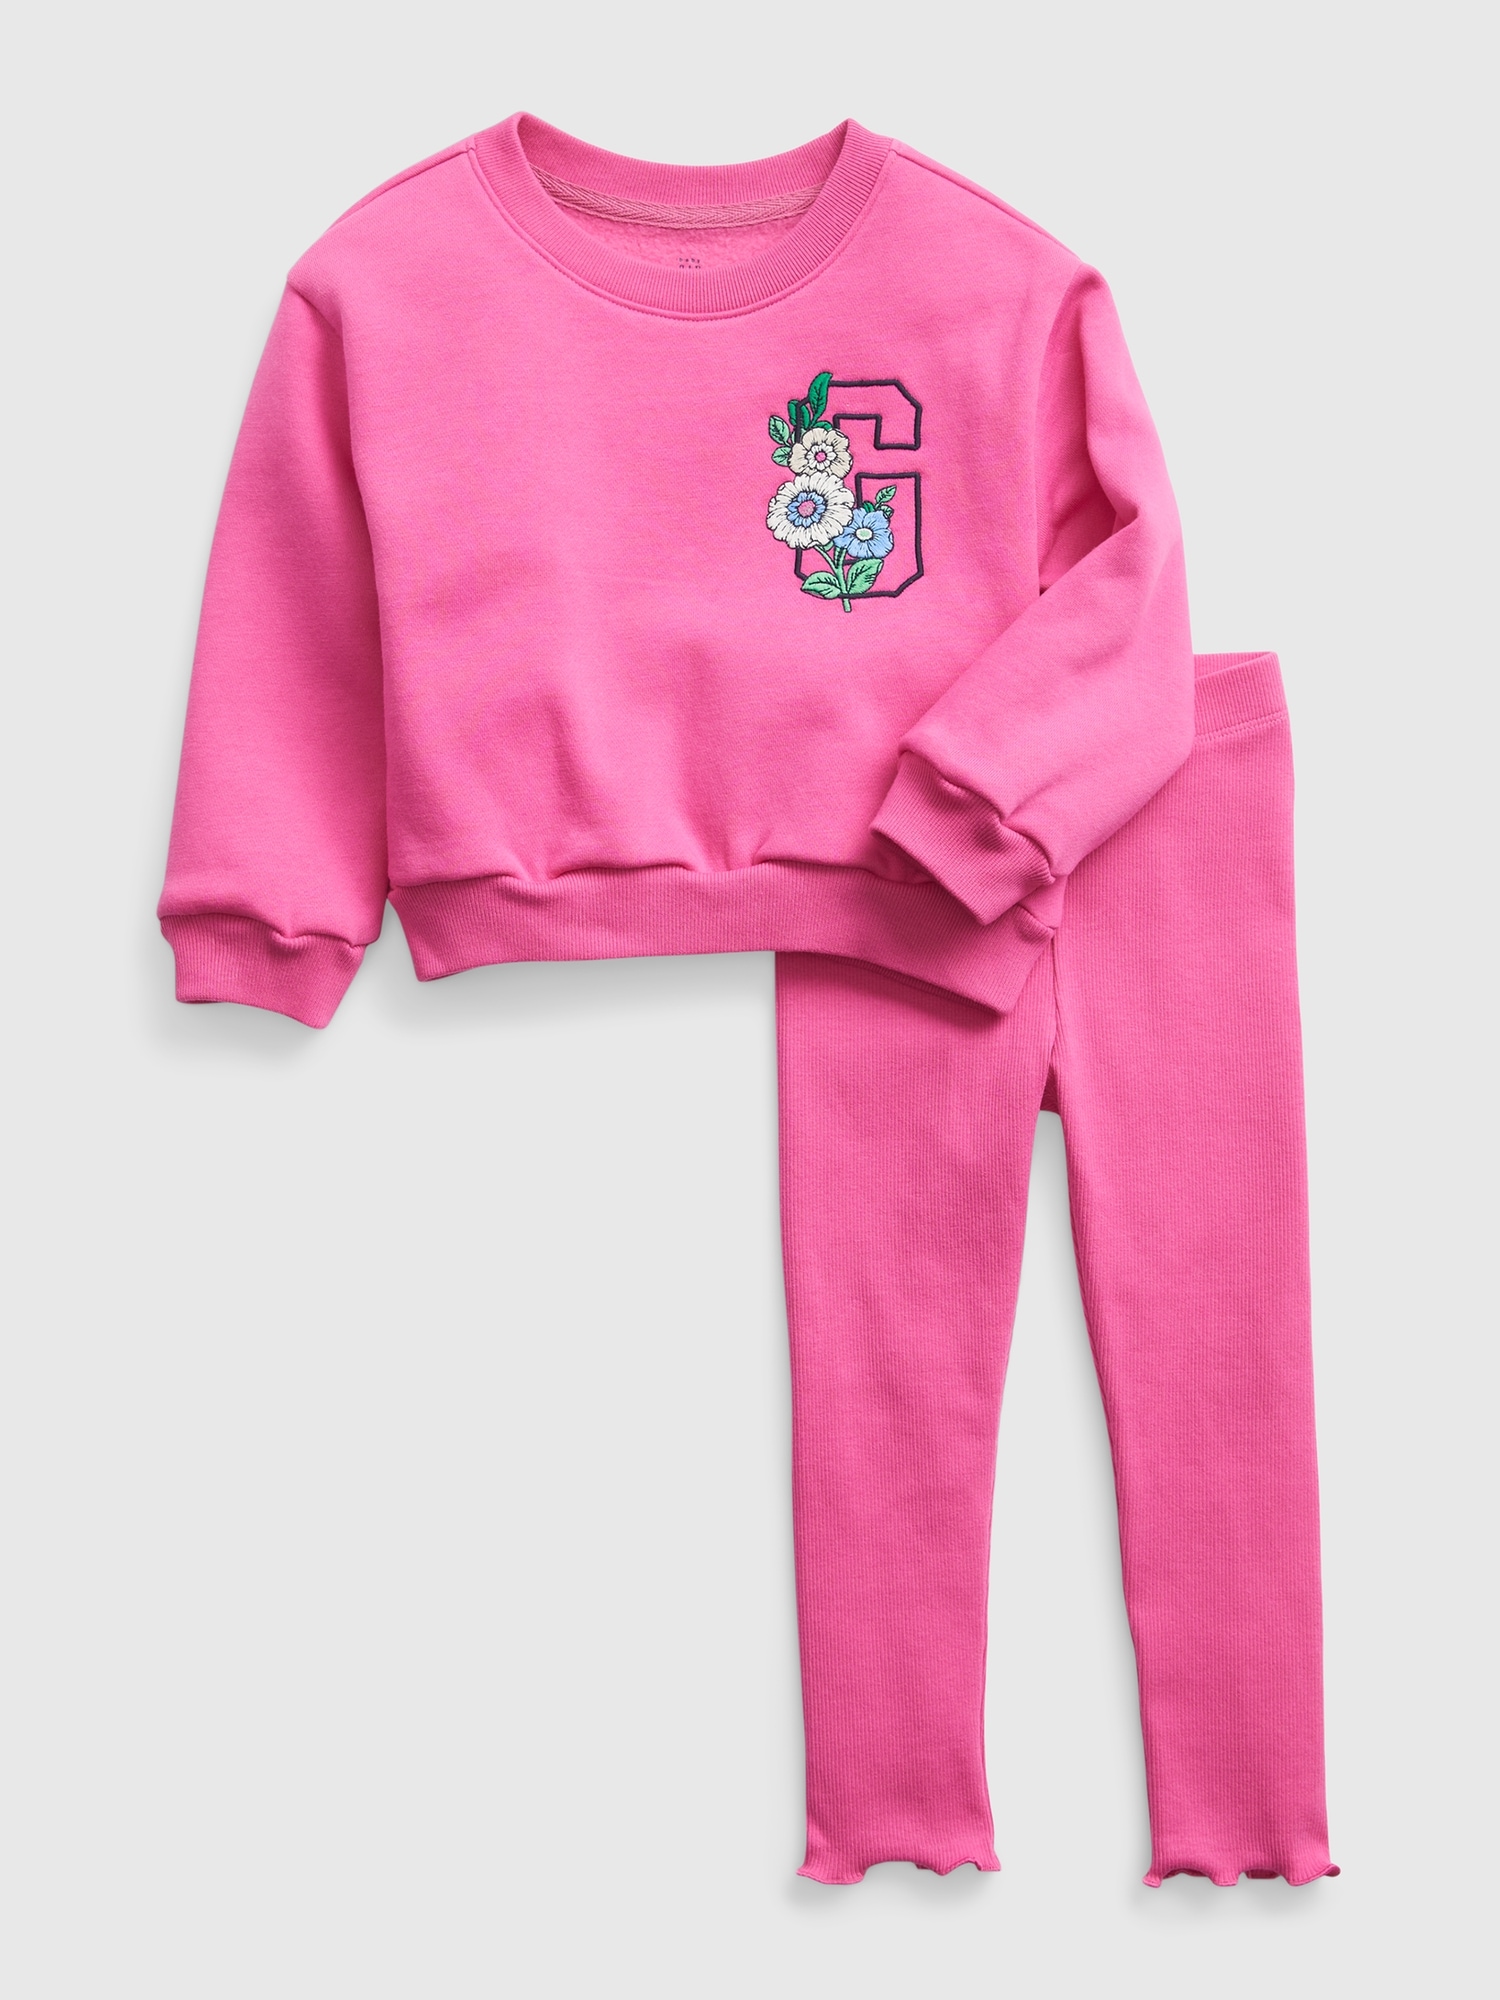 Gap Toddler Active Outfit Set pink. 1